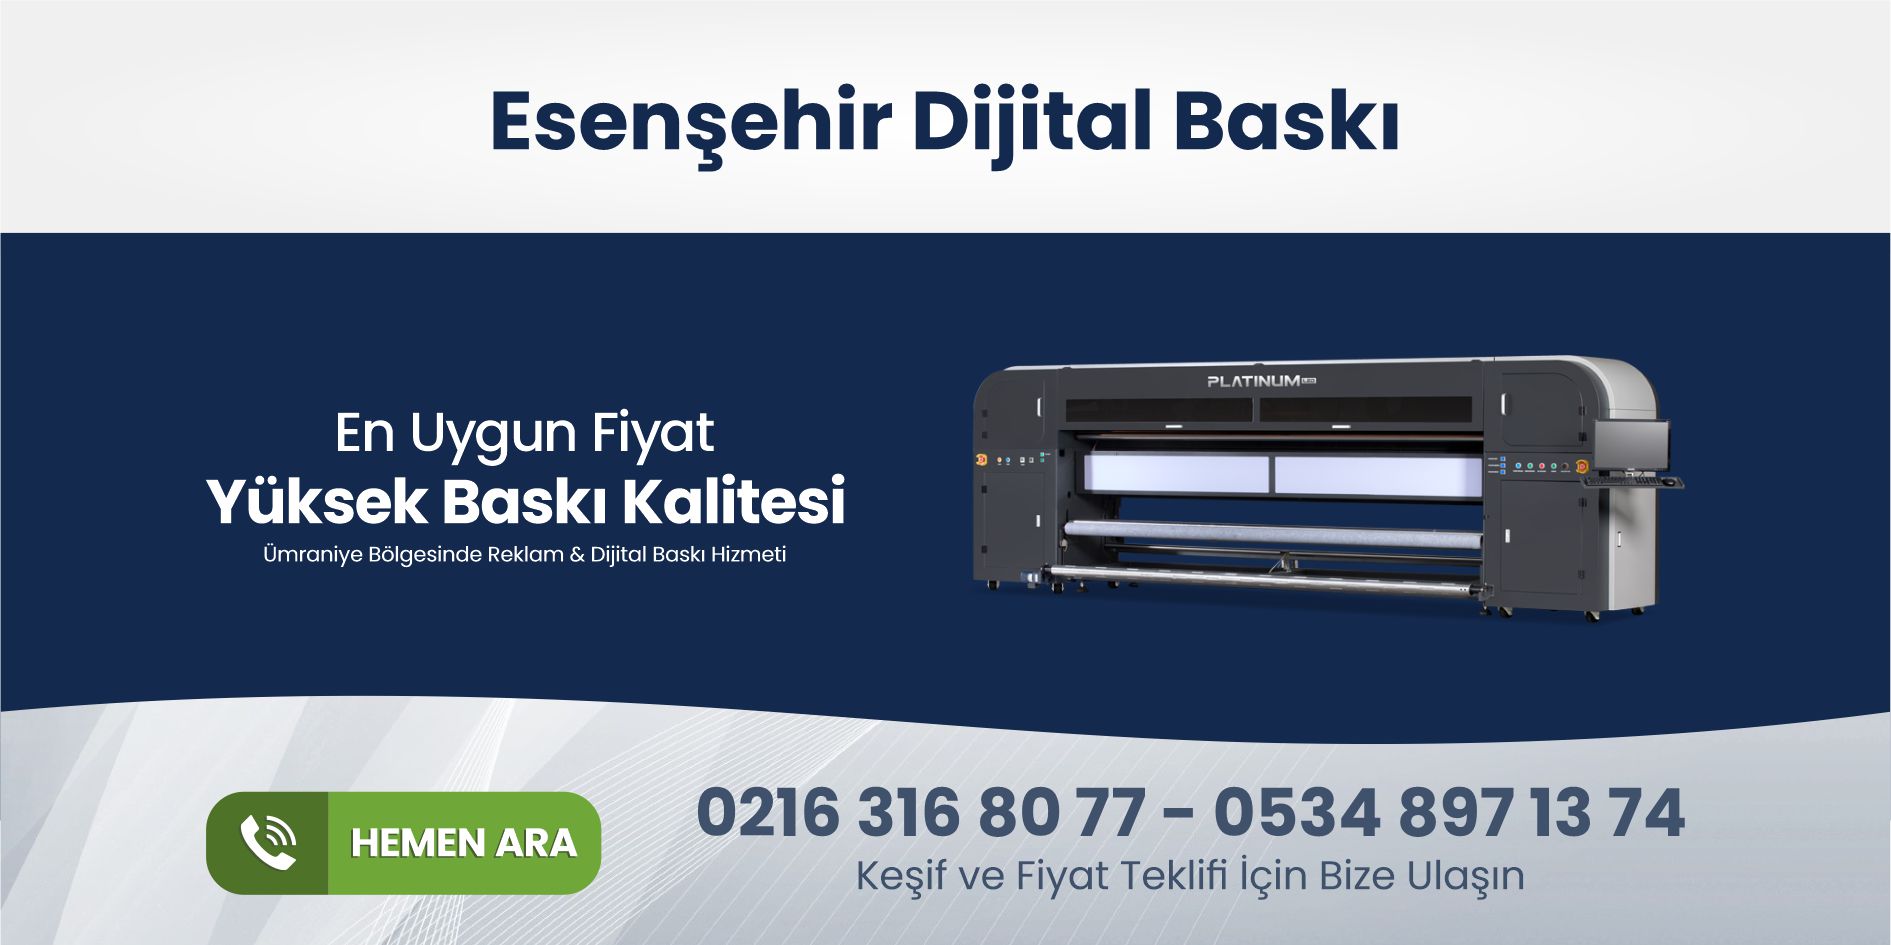 You are currently viewing Esenşehir Dijital Baskı